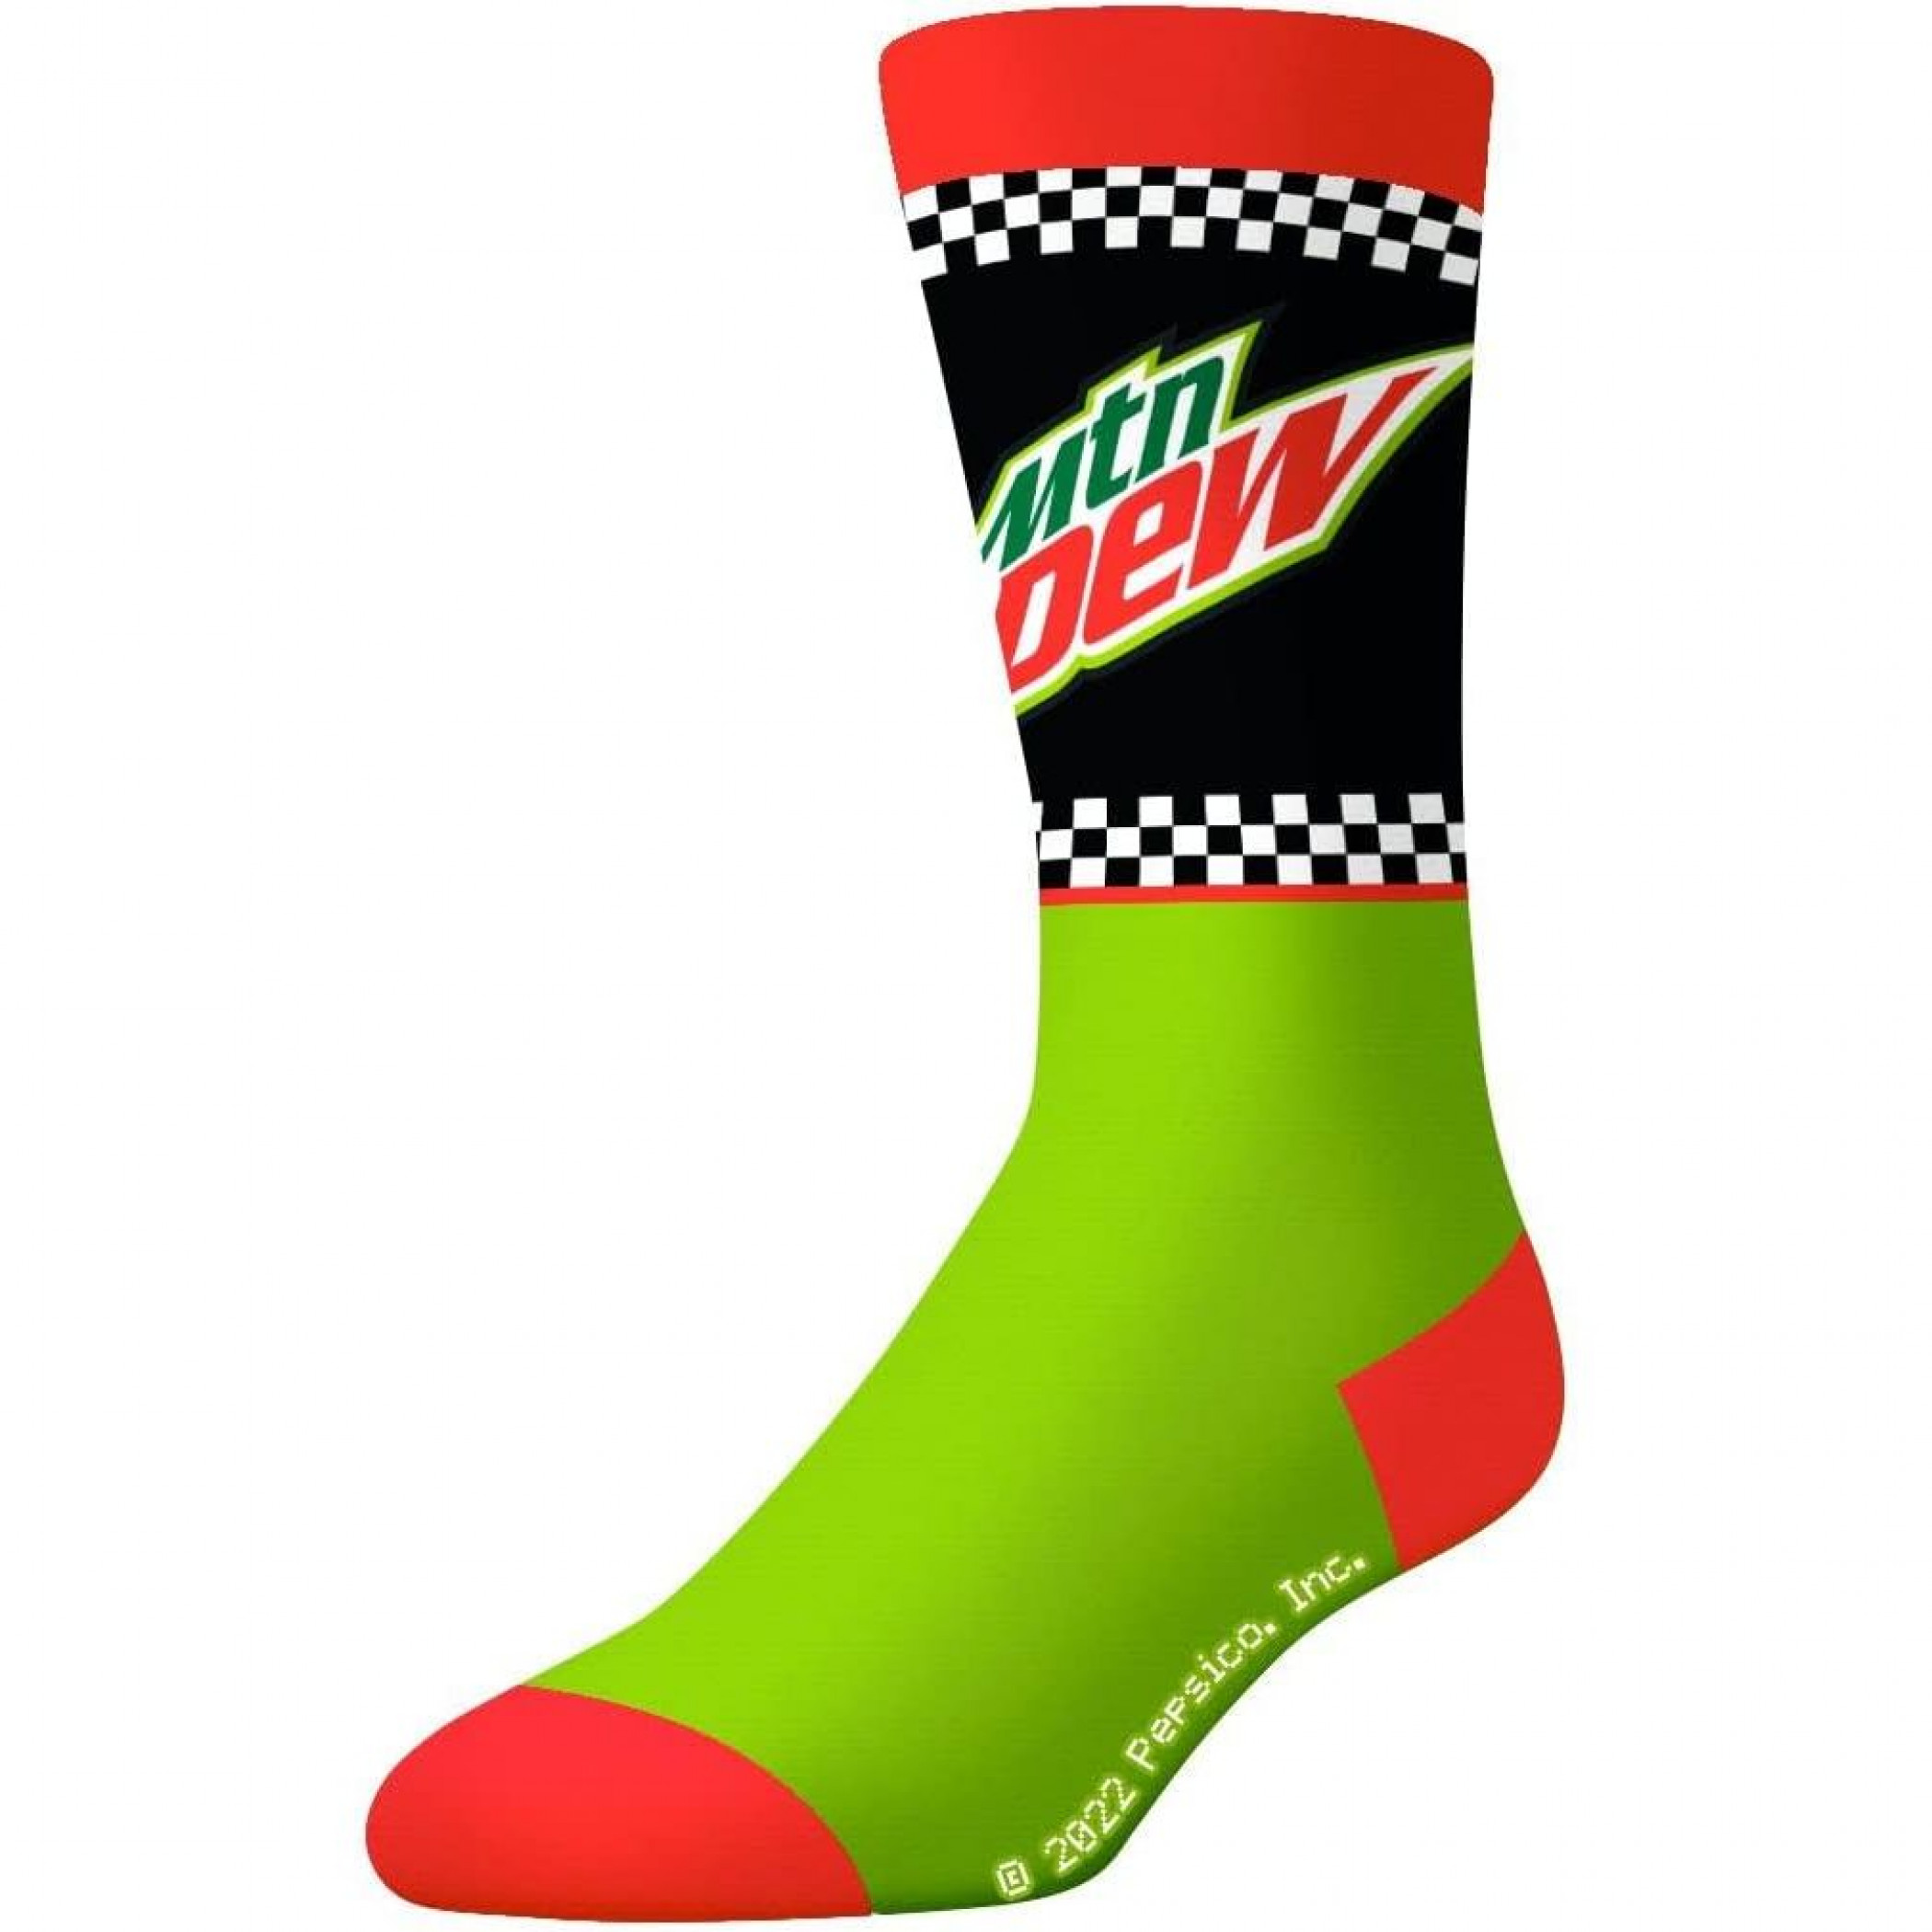 Mountain Dew Assorted Logos 3-Pack Crew Socks